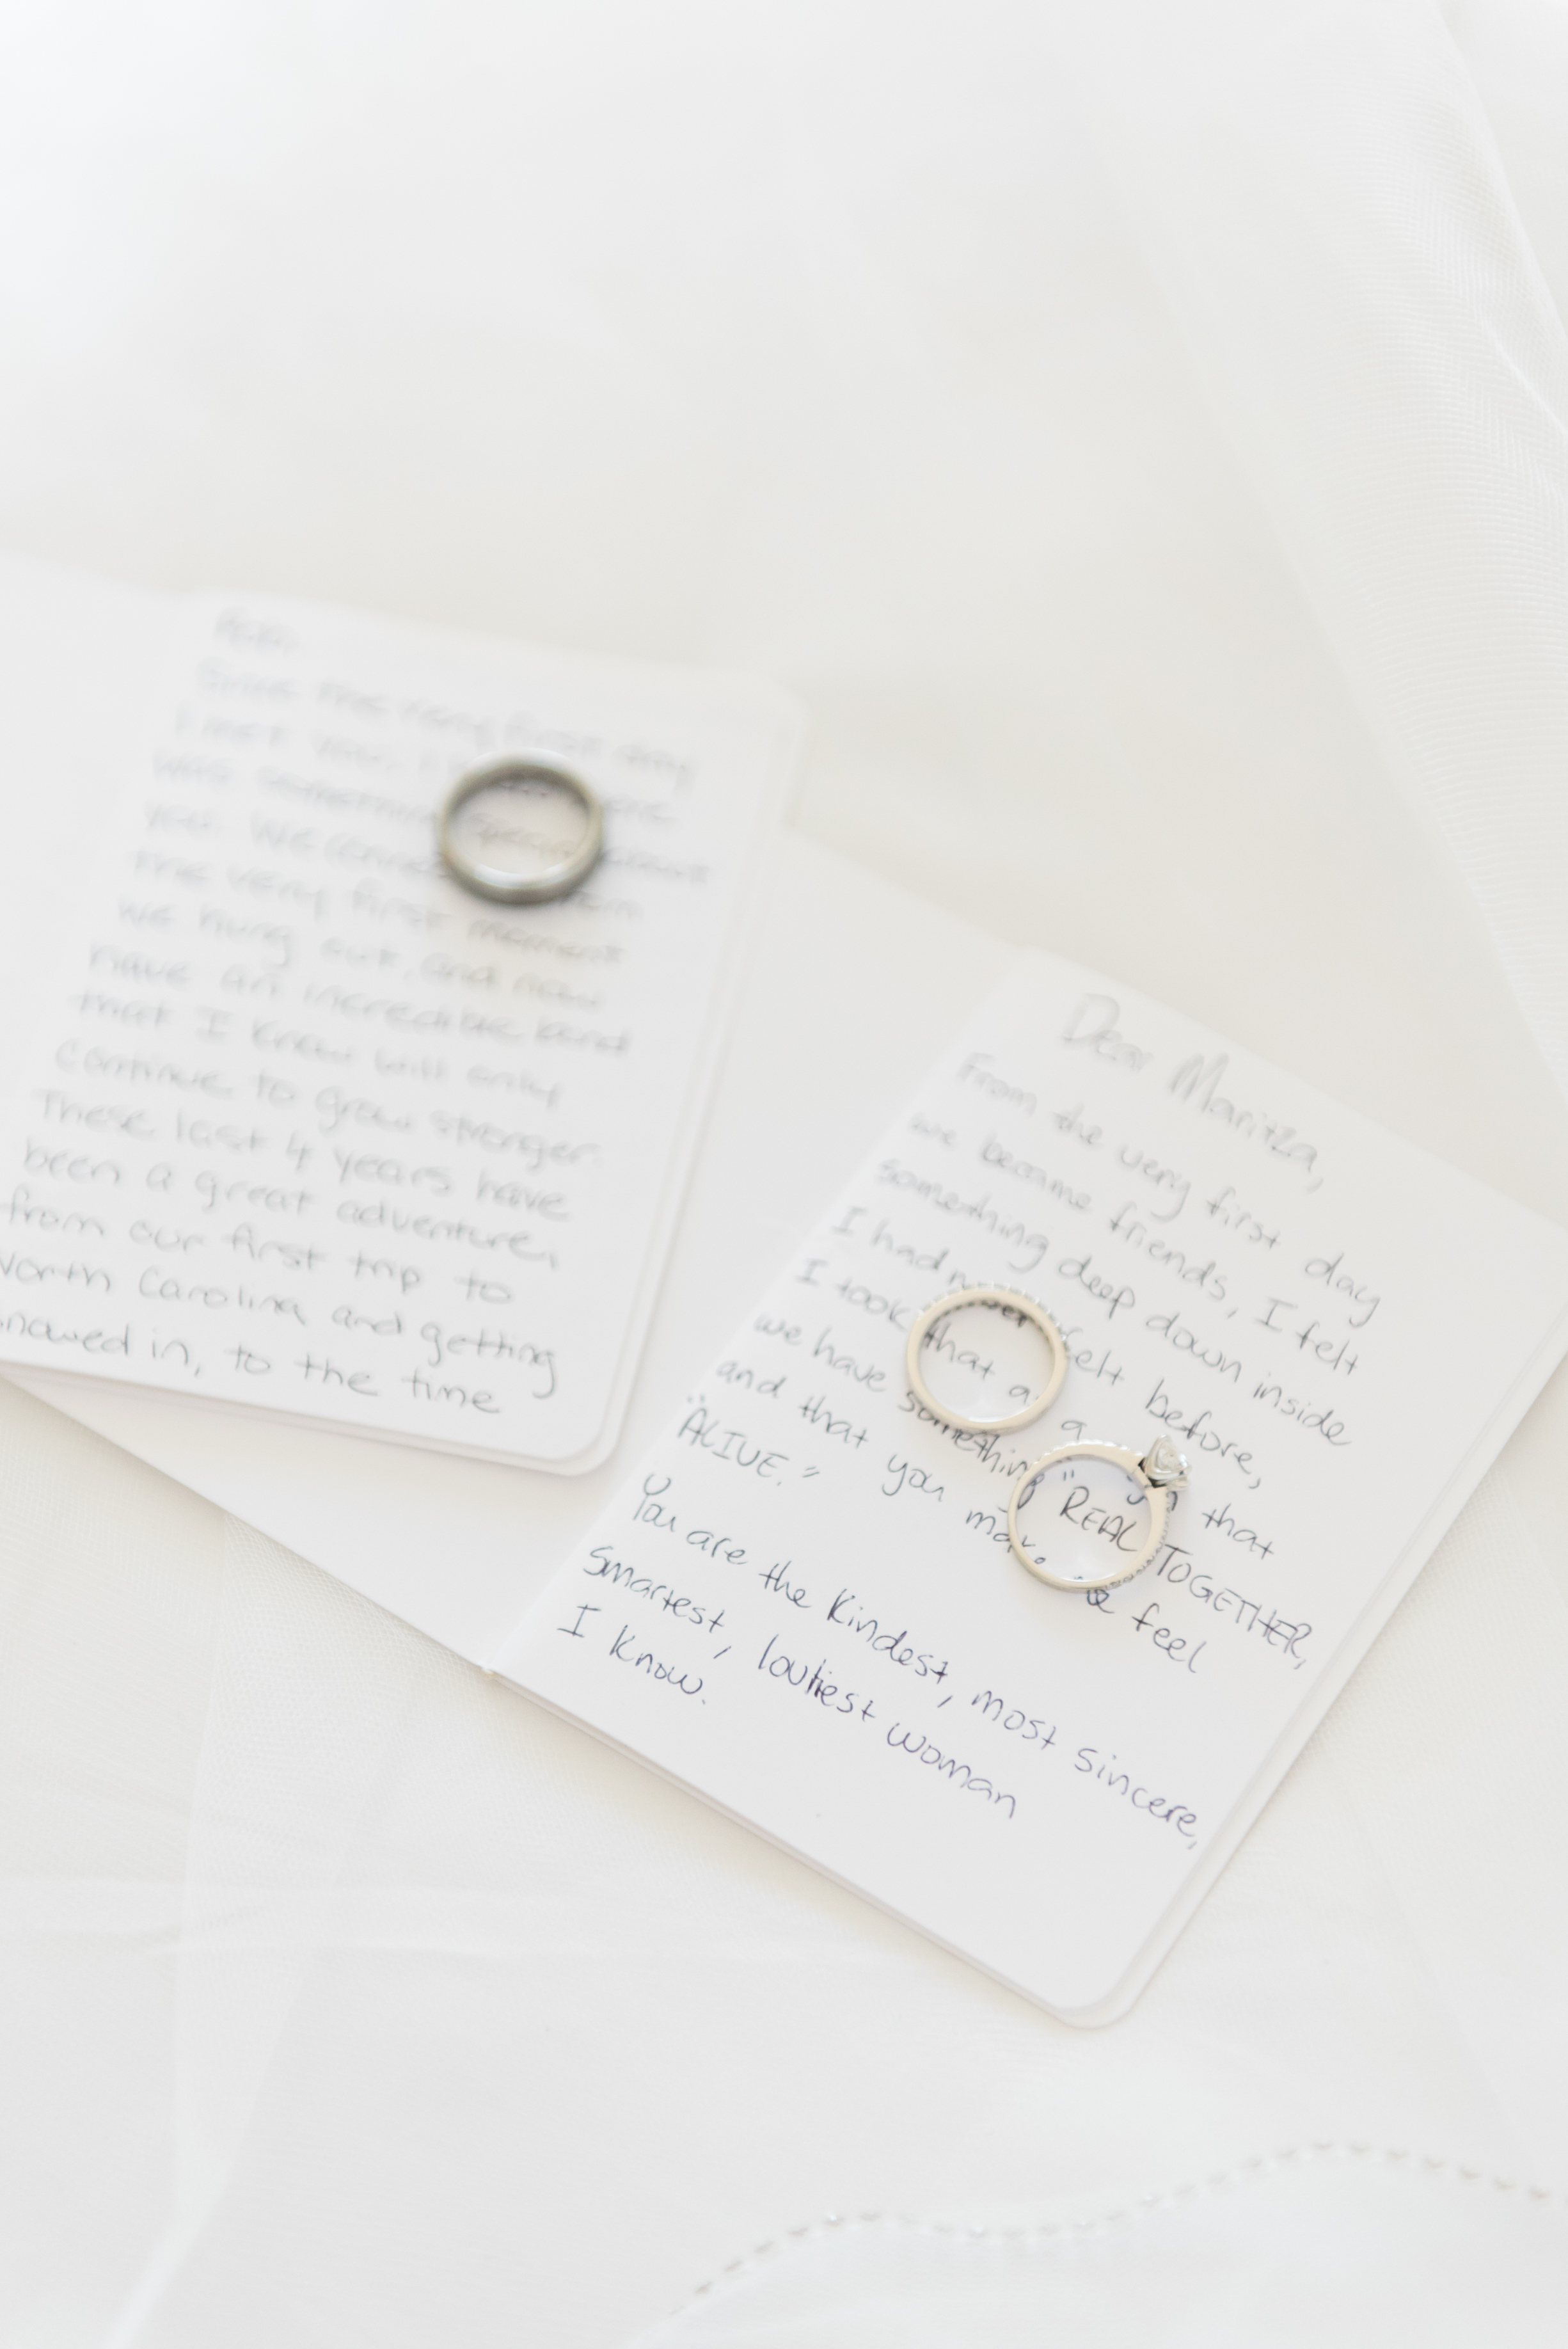 Gorgeous Wedding Ring Photos - Flagler Museum Palm Beach Wedding Venue - The Overwhelmed Bride Wedding Blog